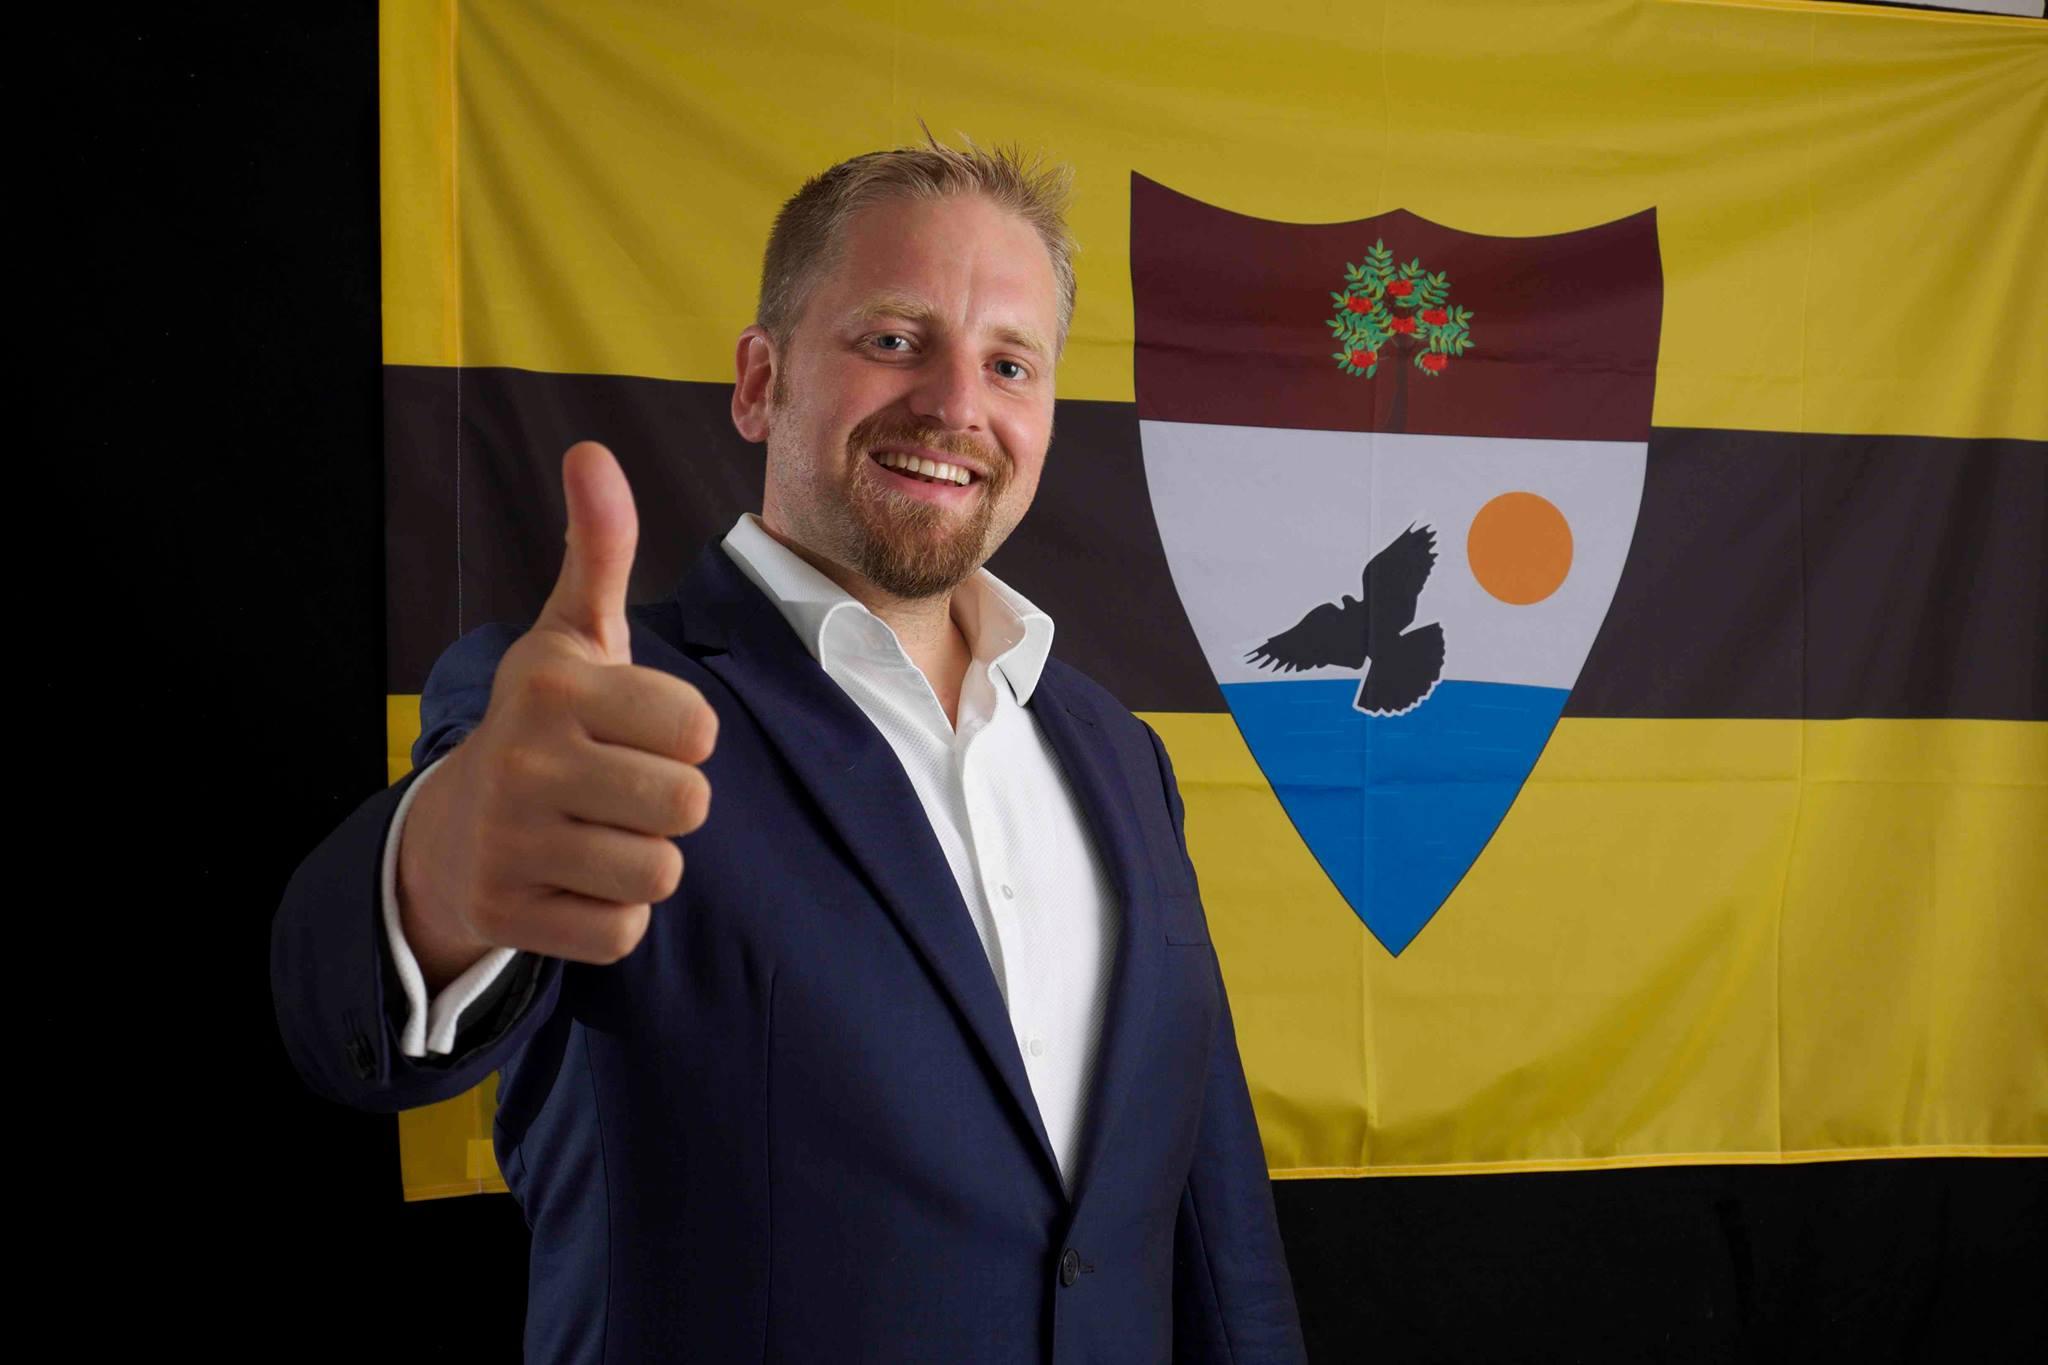 Vít Jedlička spera che la Svizzera voglia riconoscere Liberland nei prossimi anni.